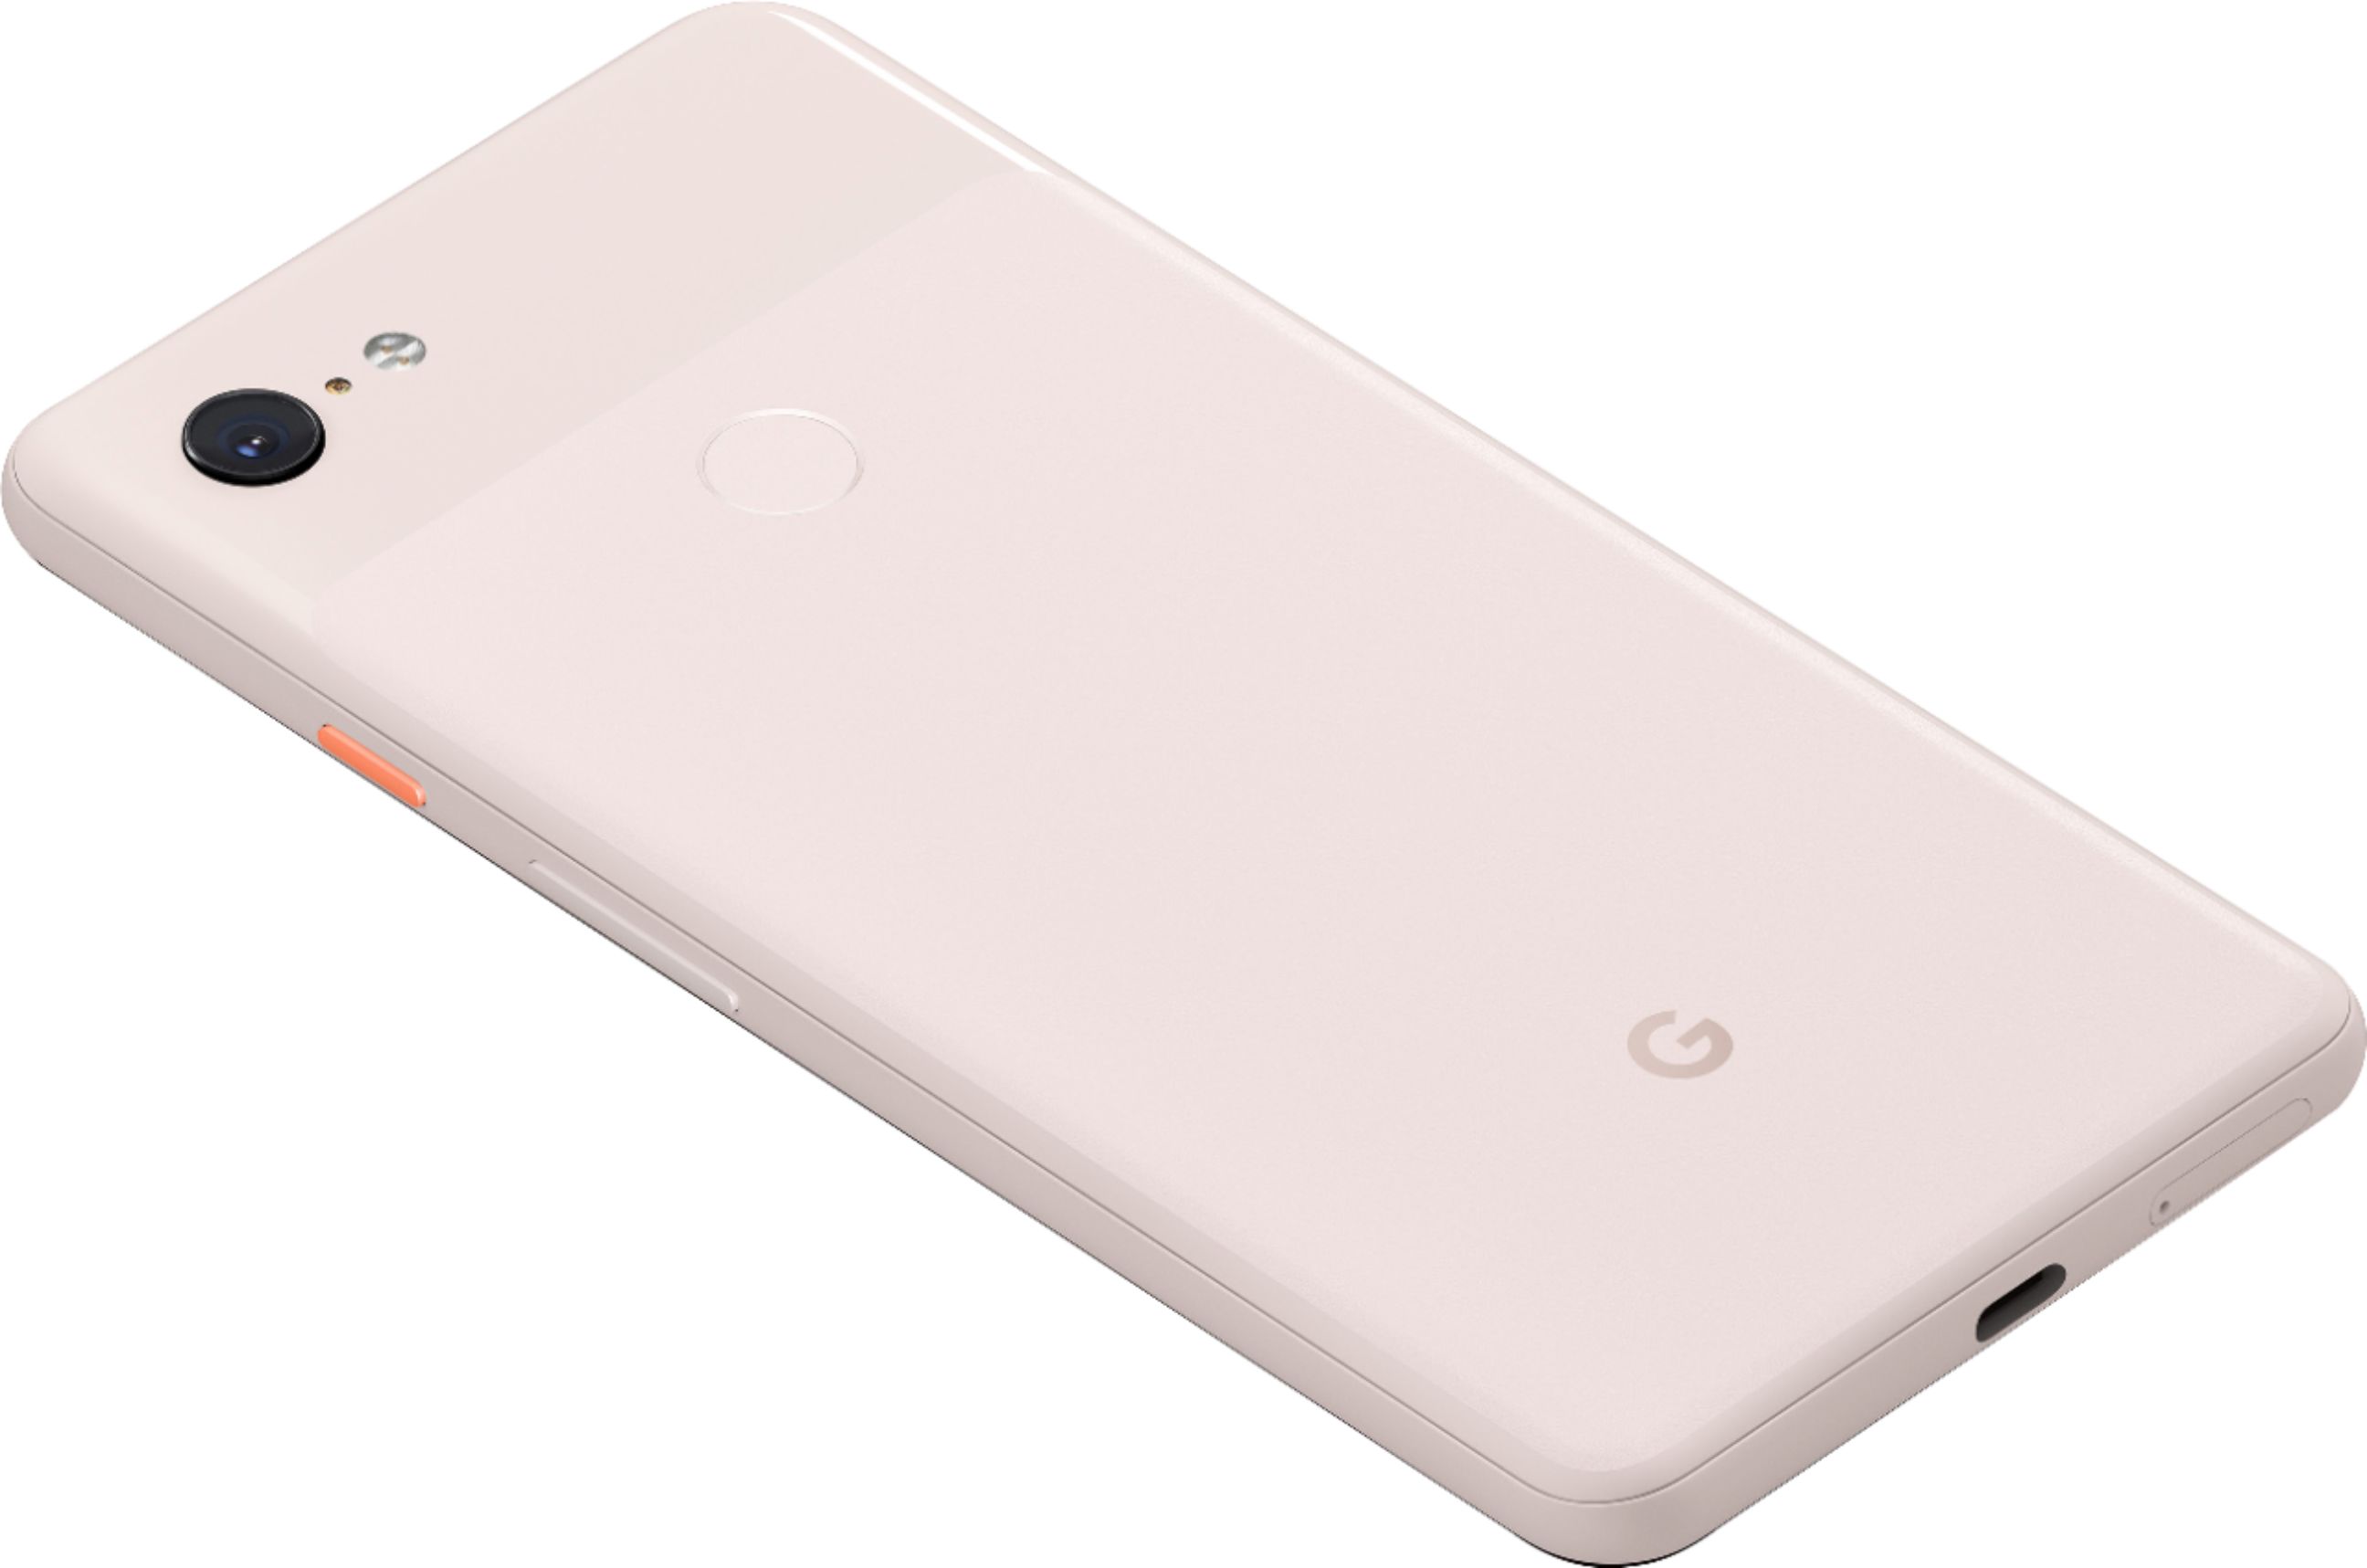 Google Pixel 3-64GB Unlocked Not Pink for sale online 